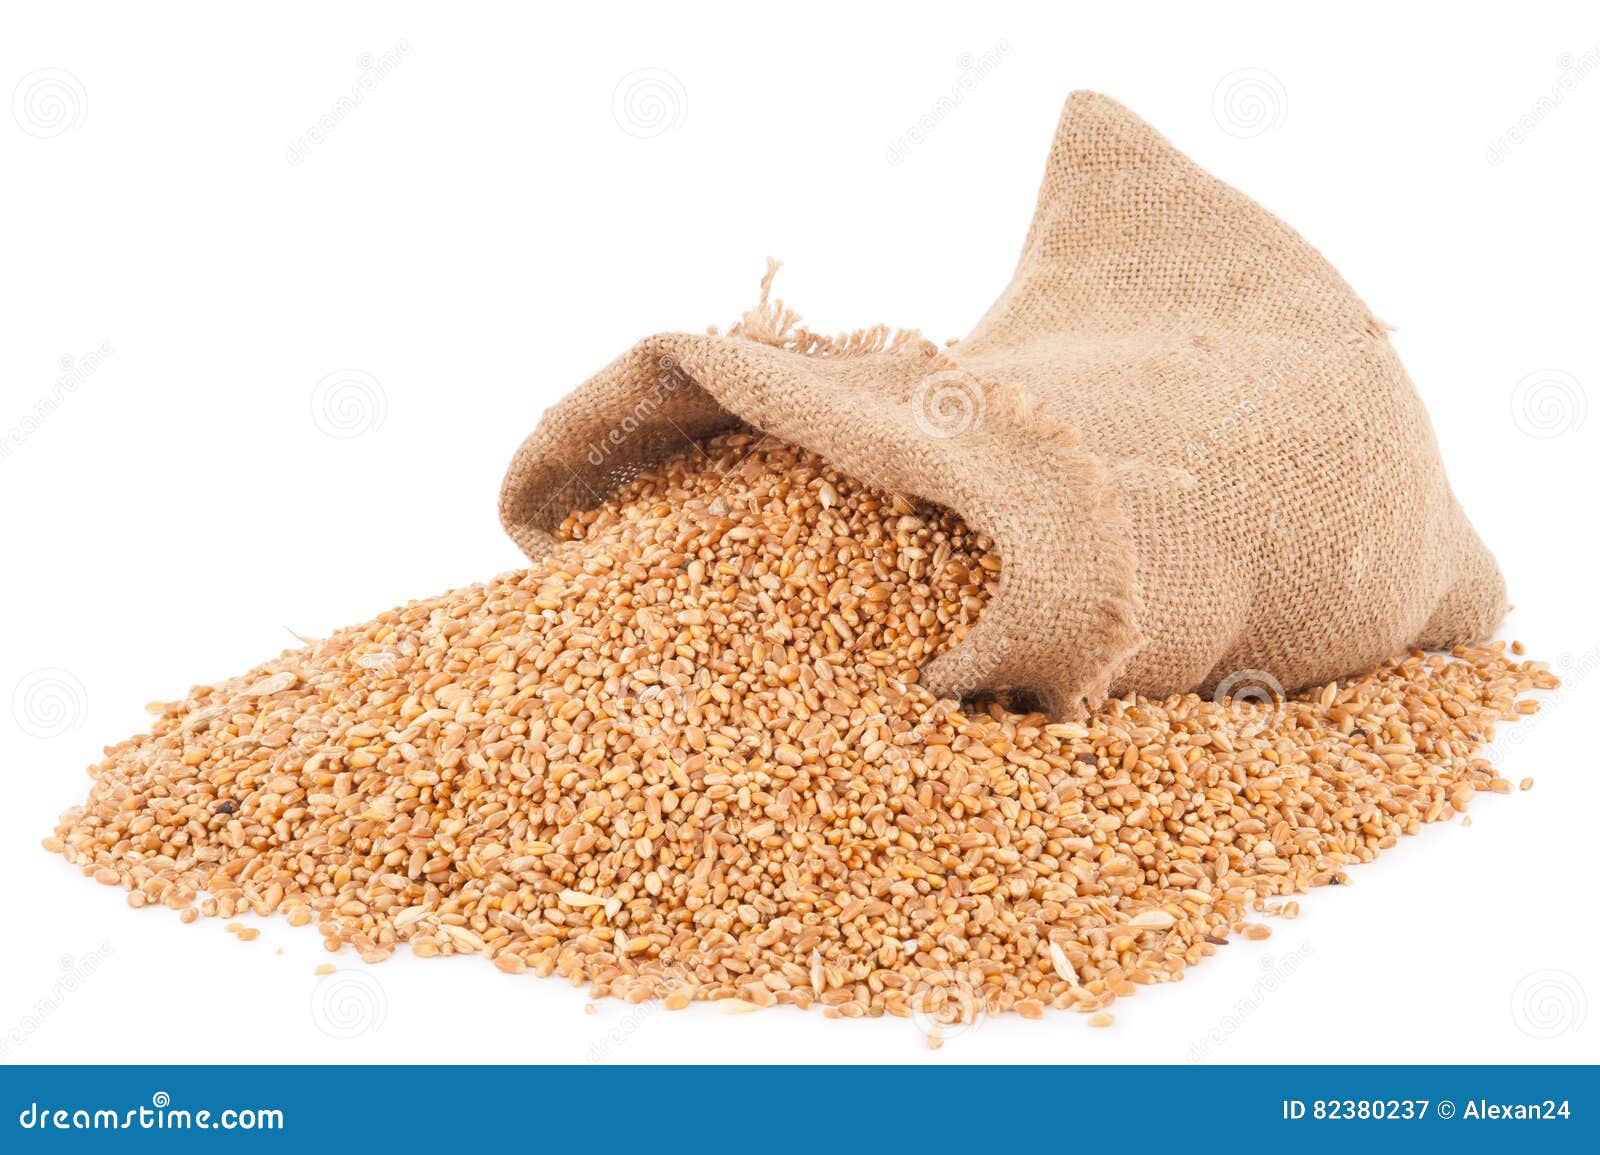 Textura de grano de trigo foto de archivo. Imagen de comida - 187567368